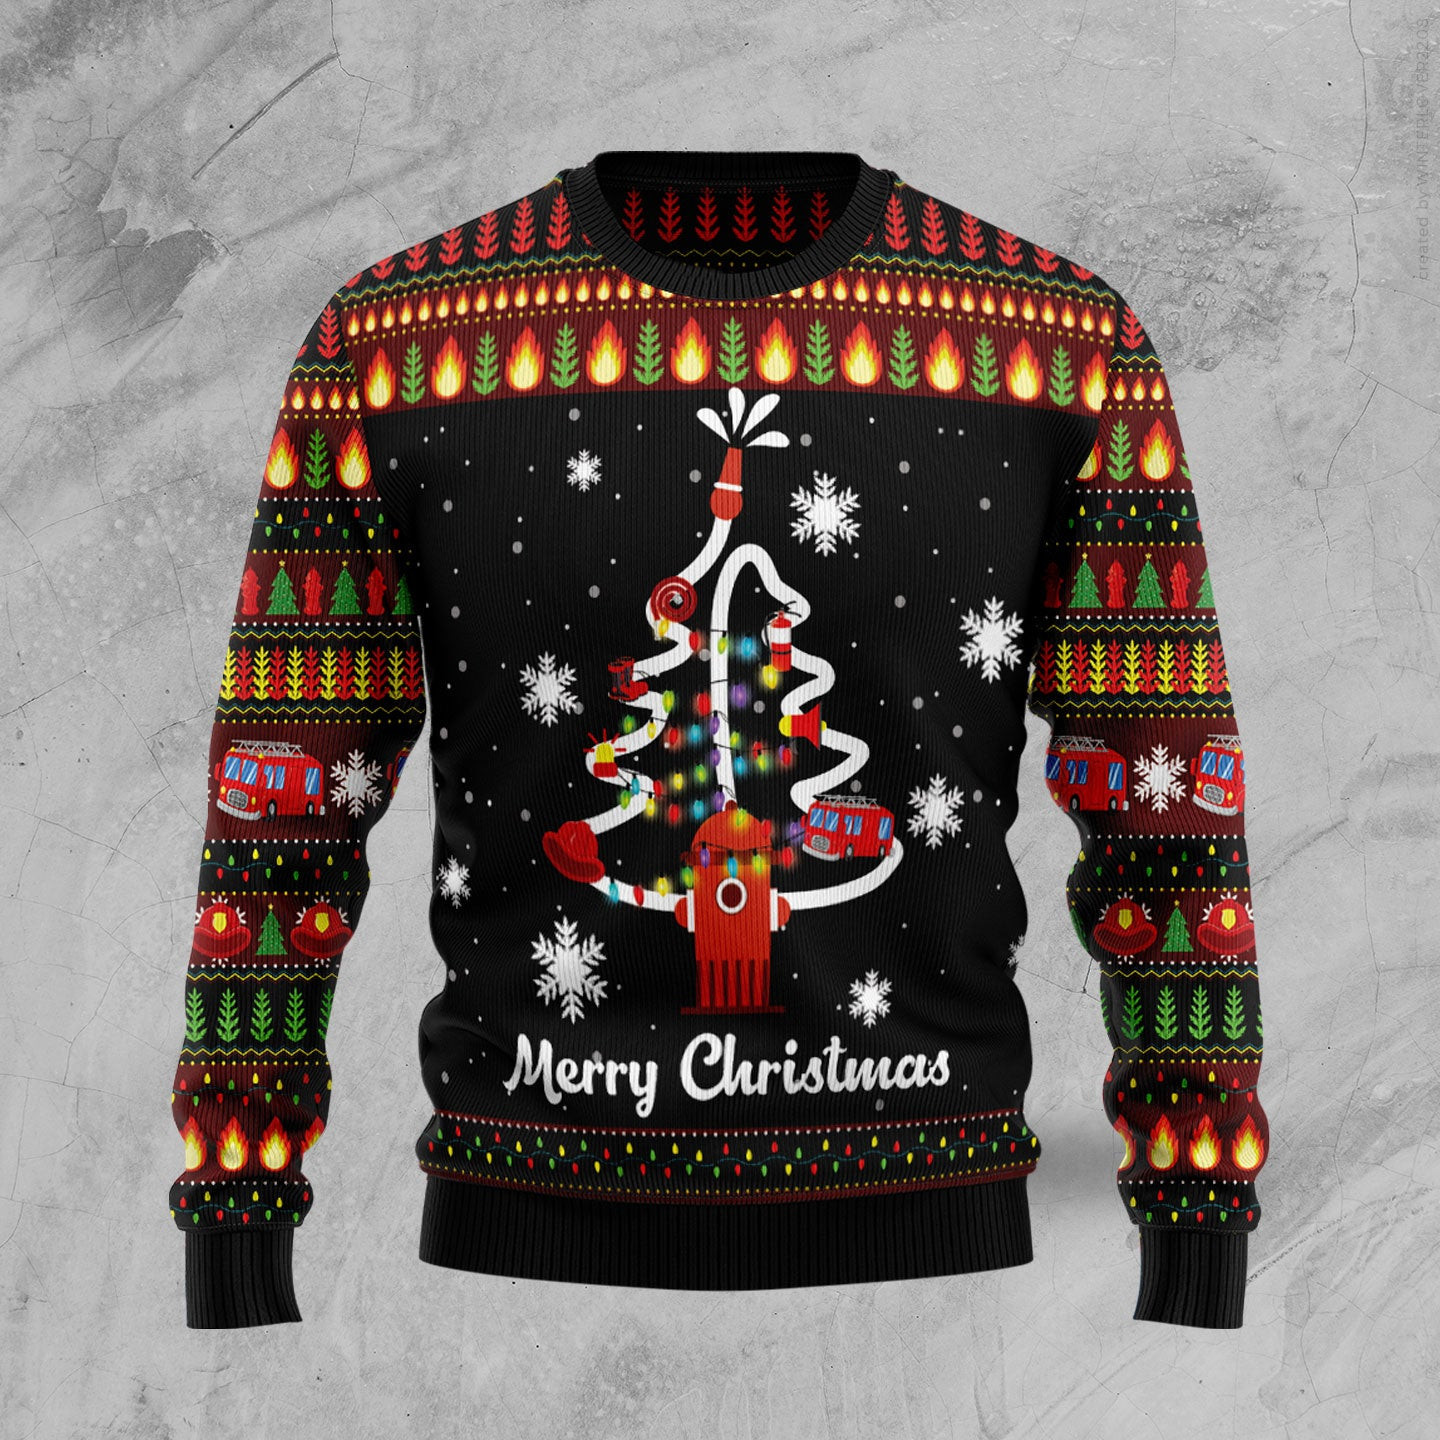 Merry Christmas Firefighter Ugly Christmas Sweater, Ugly Sweater For Men Women, Holiday Sweater